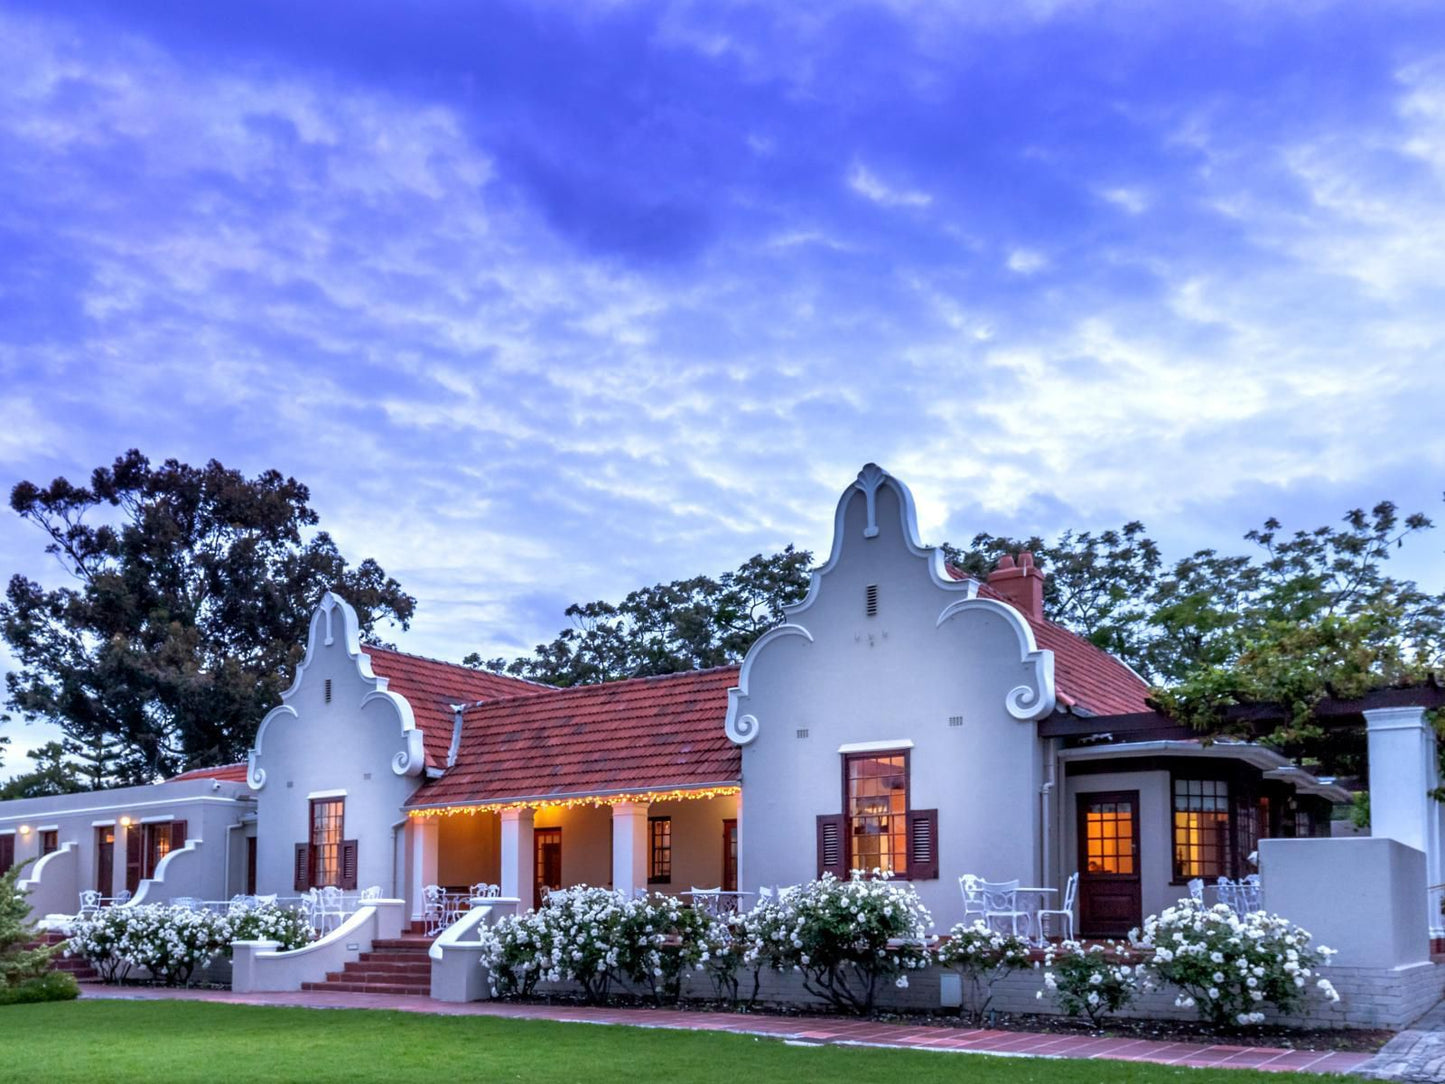 Glen Avon Lodge Constantia Cape Town Western Cape South Africa Colorful, House, Building, Architecture